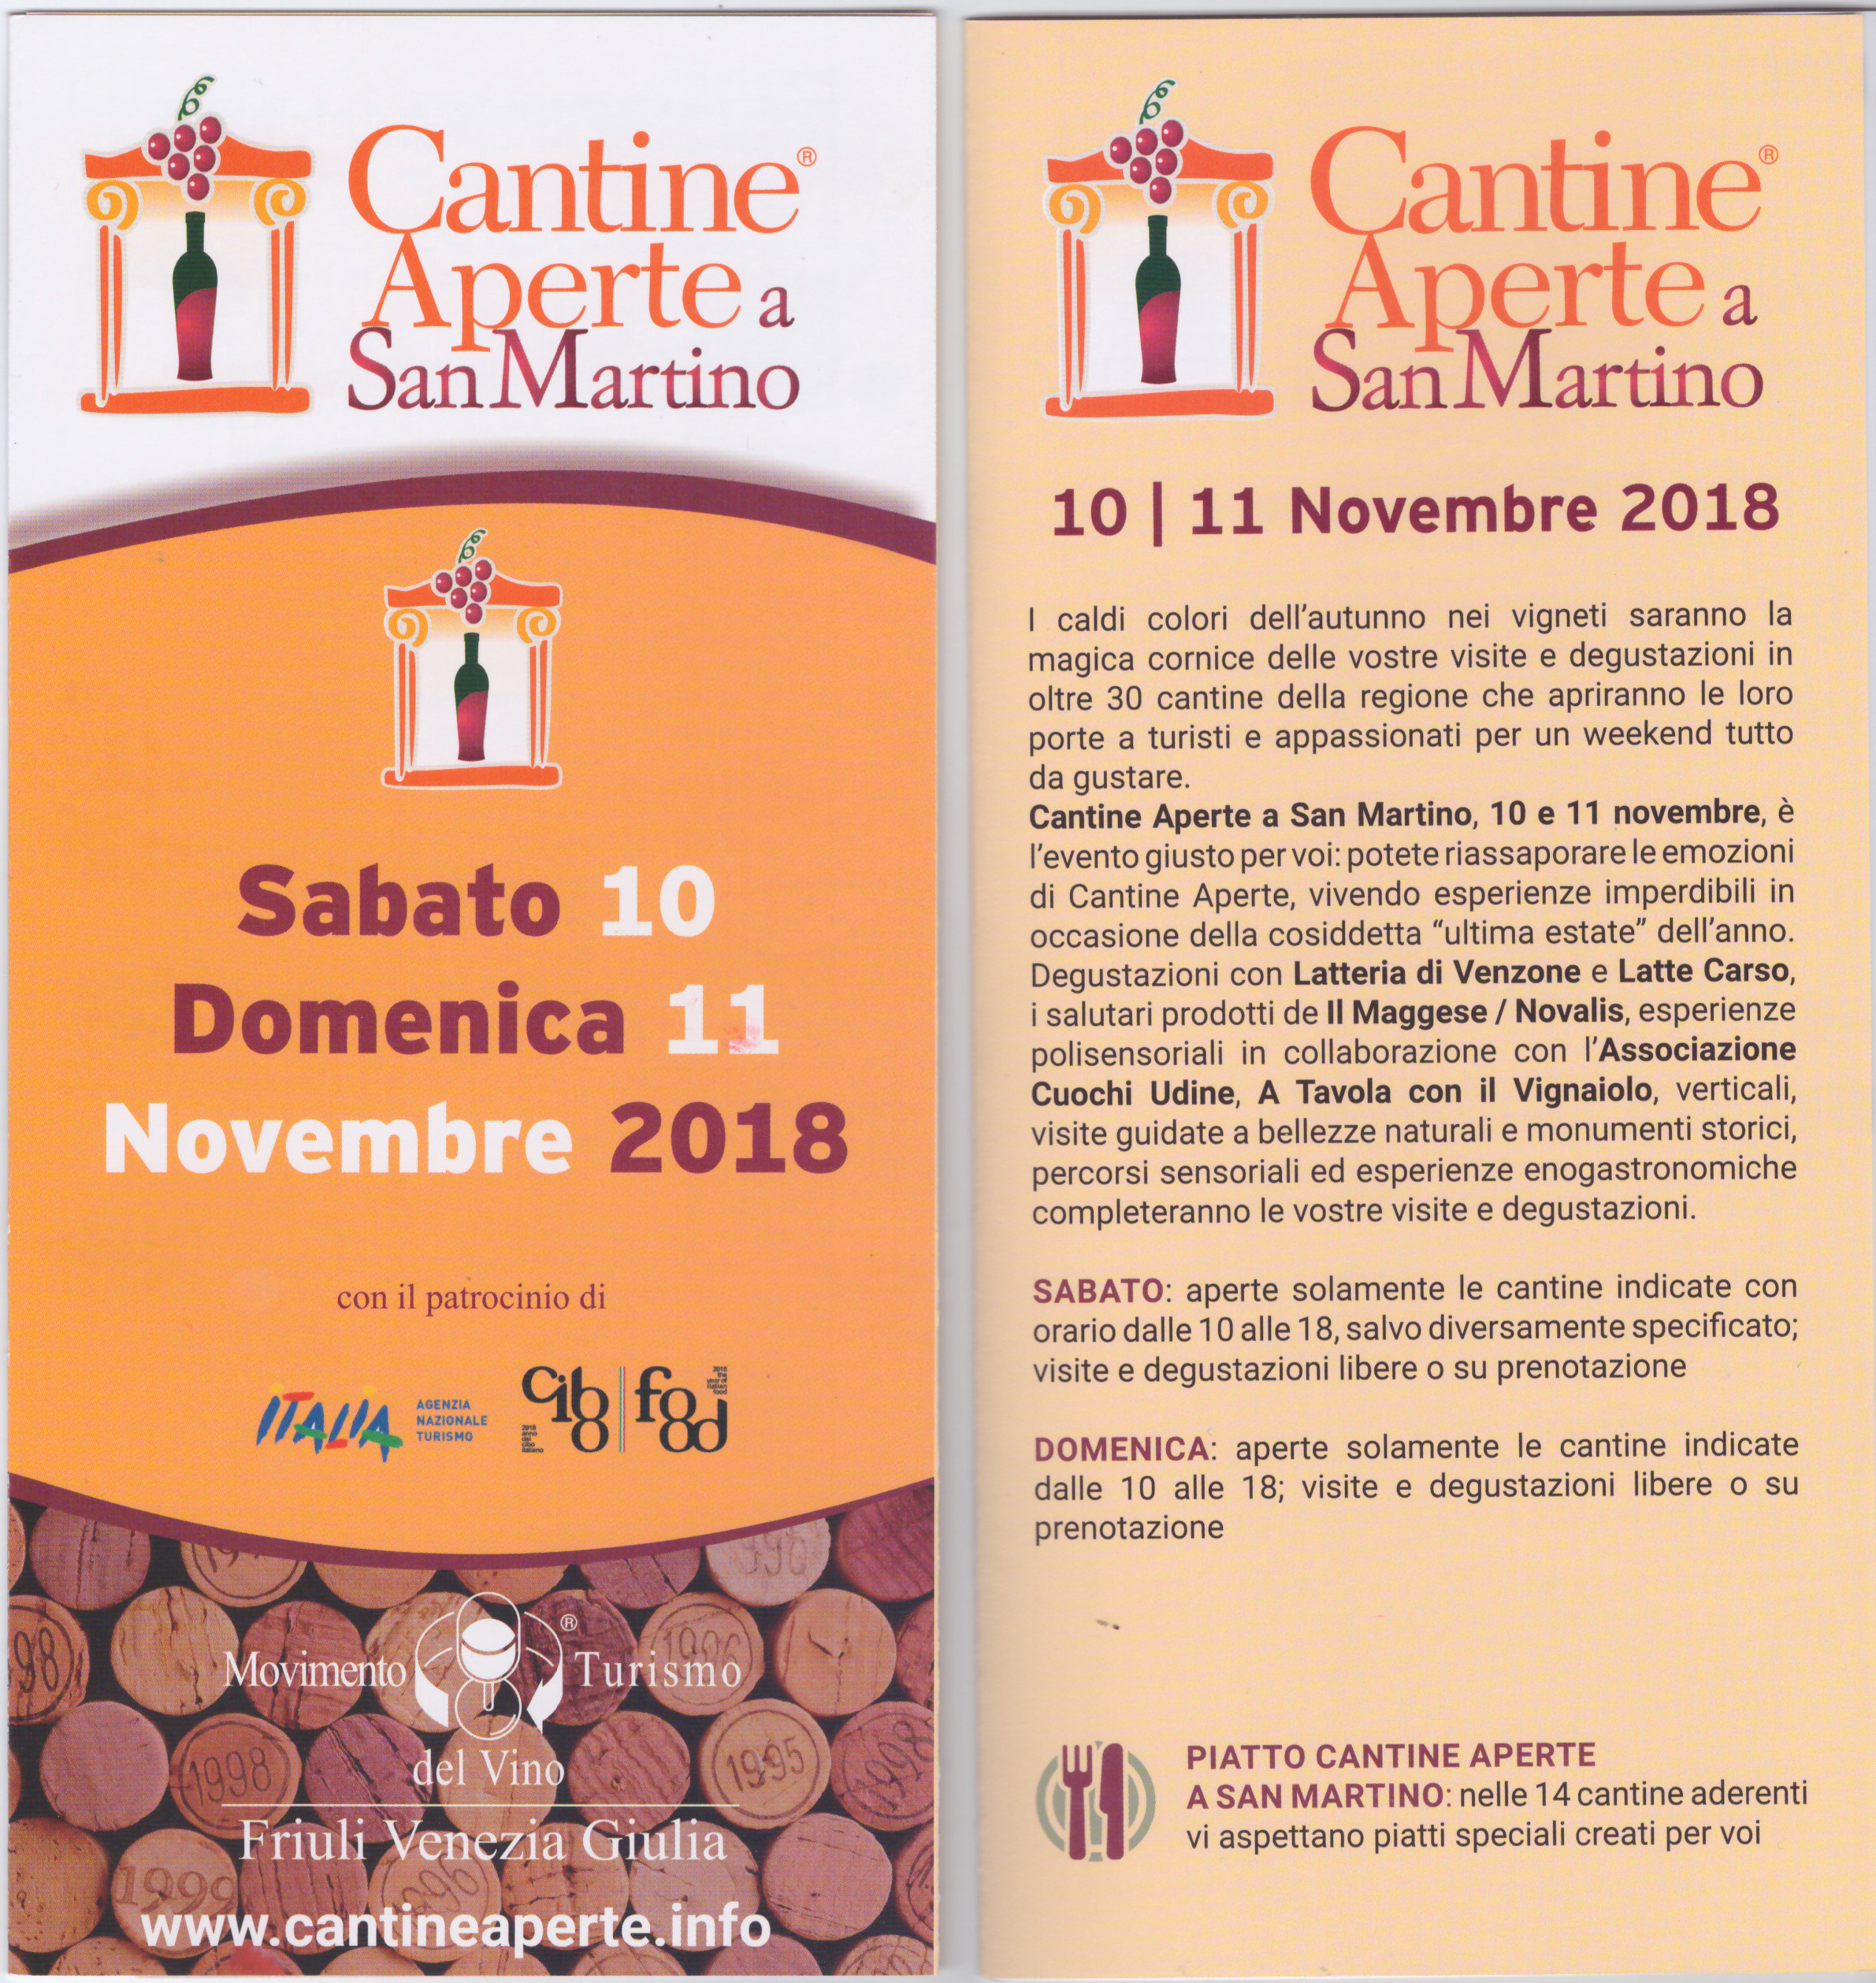 Cantine Aperte a San Martino 2018